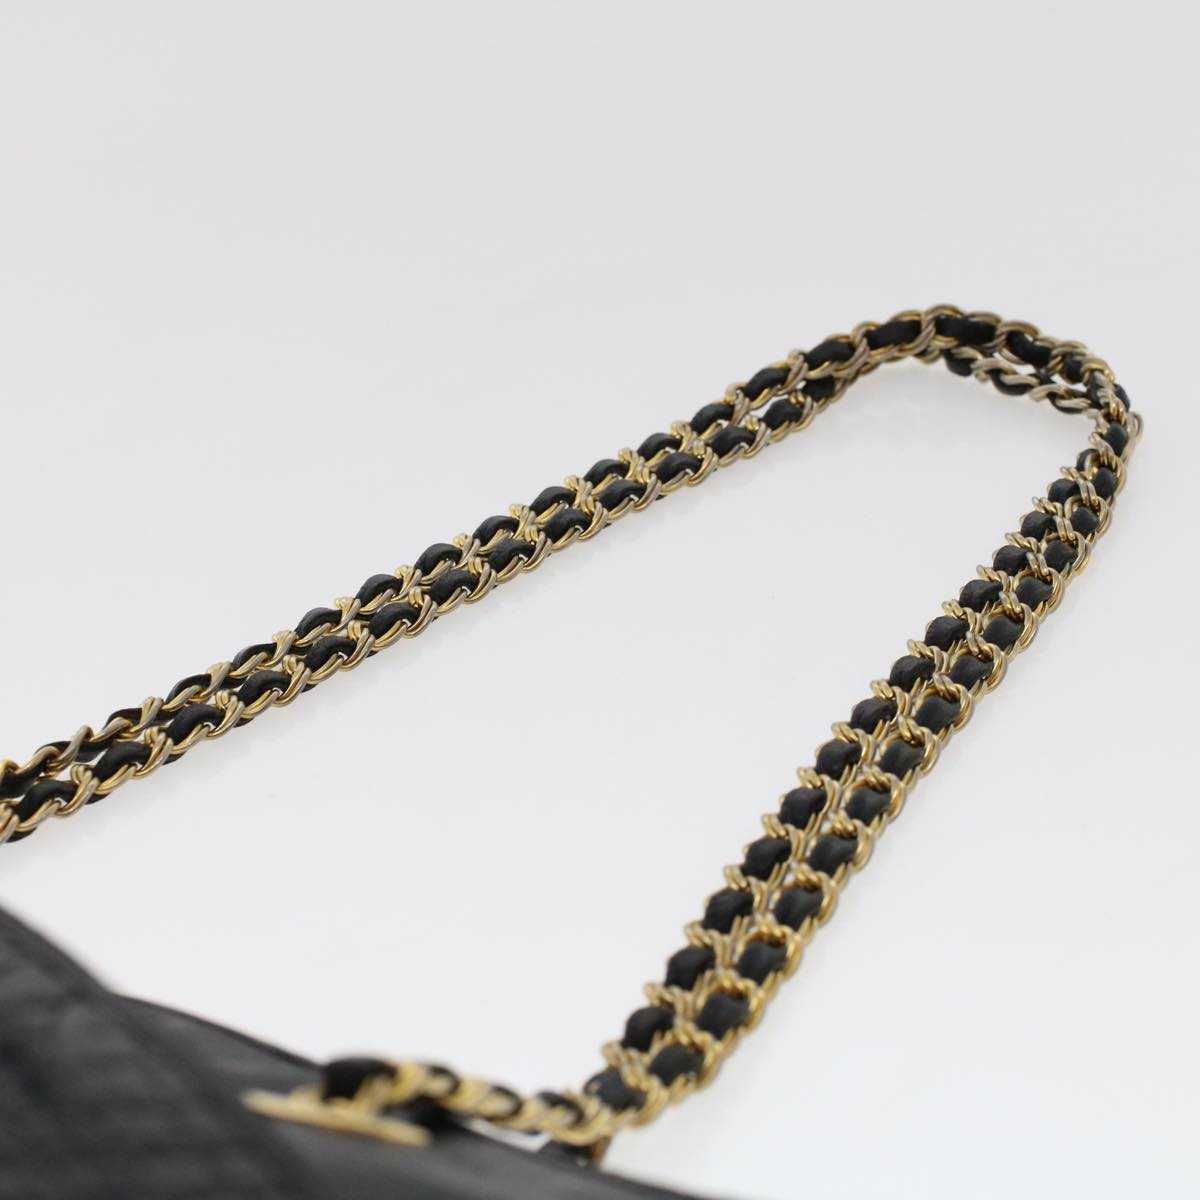 BALLY Chain Shoulder Bag Leather Black Auth yb232